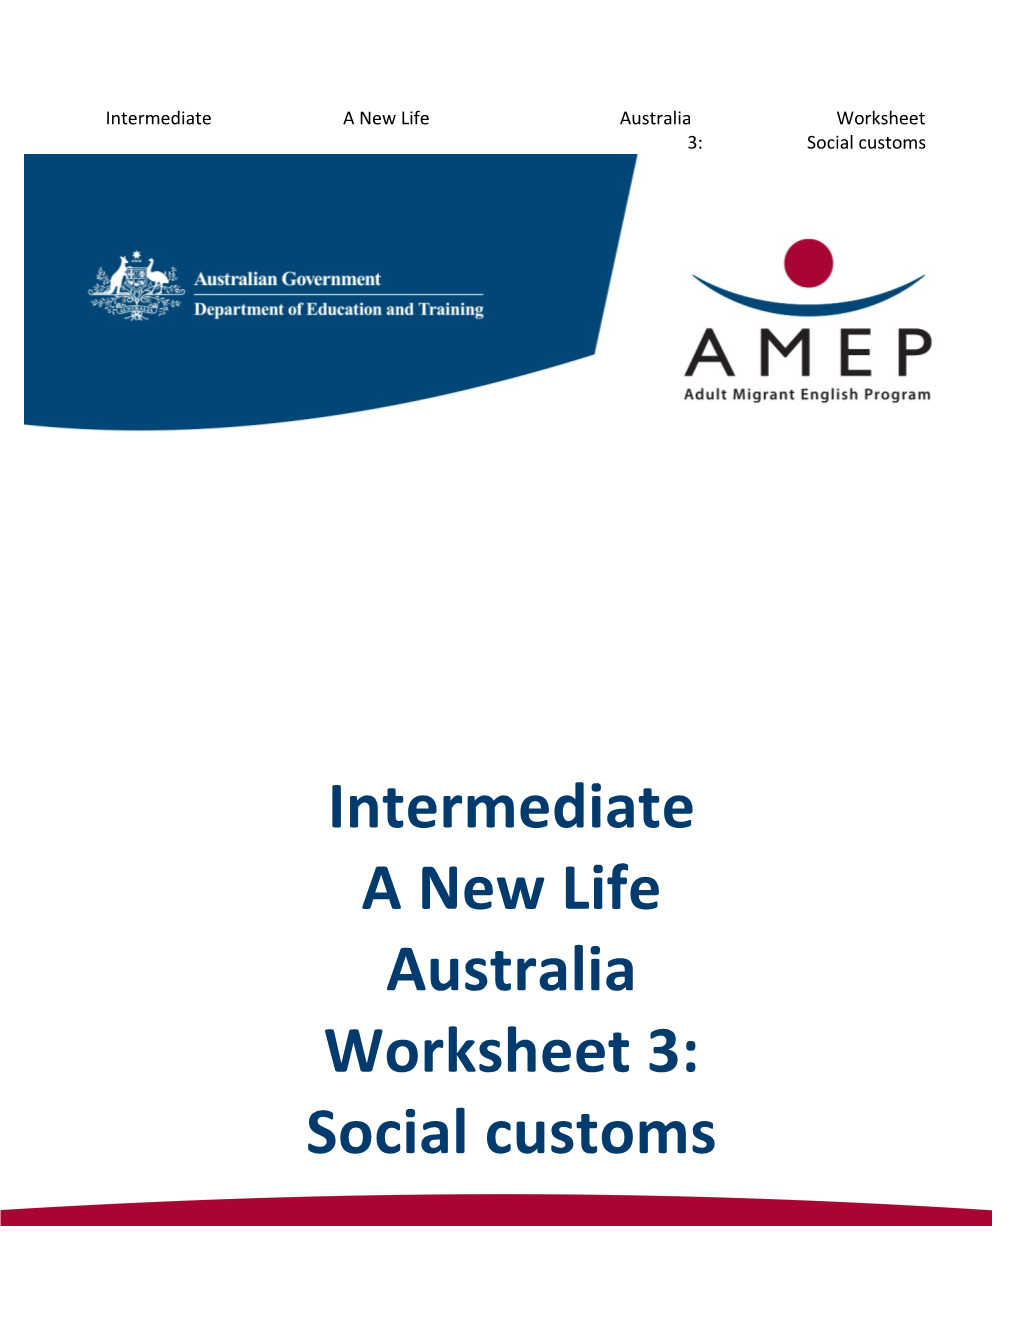 Intermediate a New Life Australia Worksheet 3: Social Customs